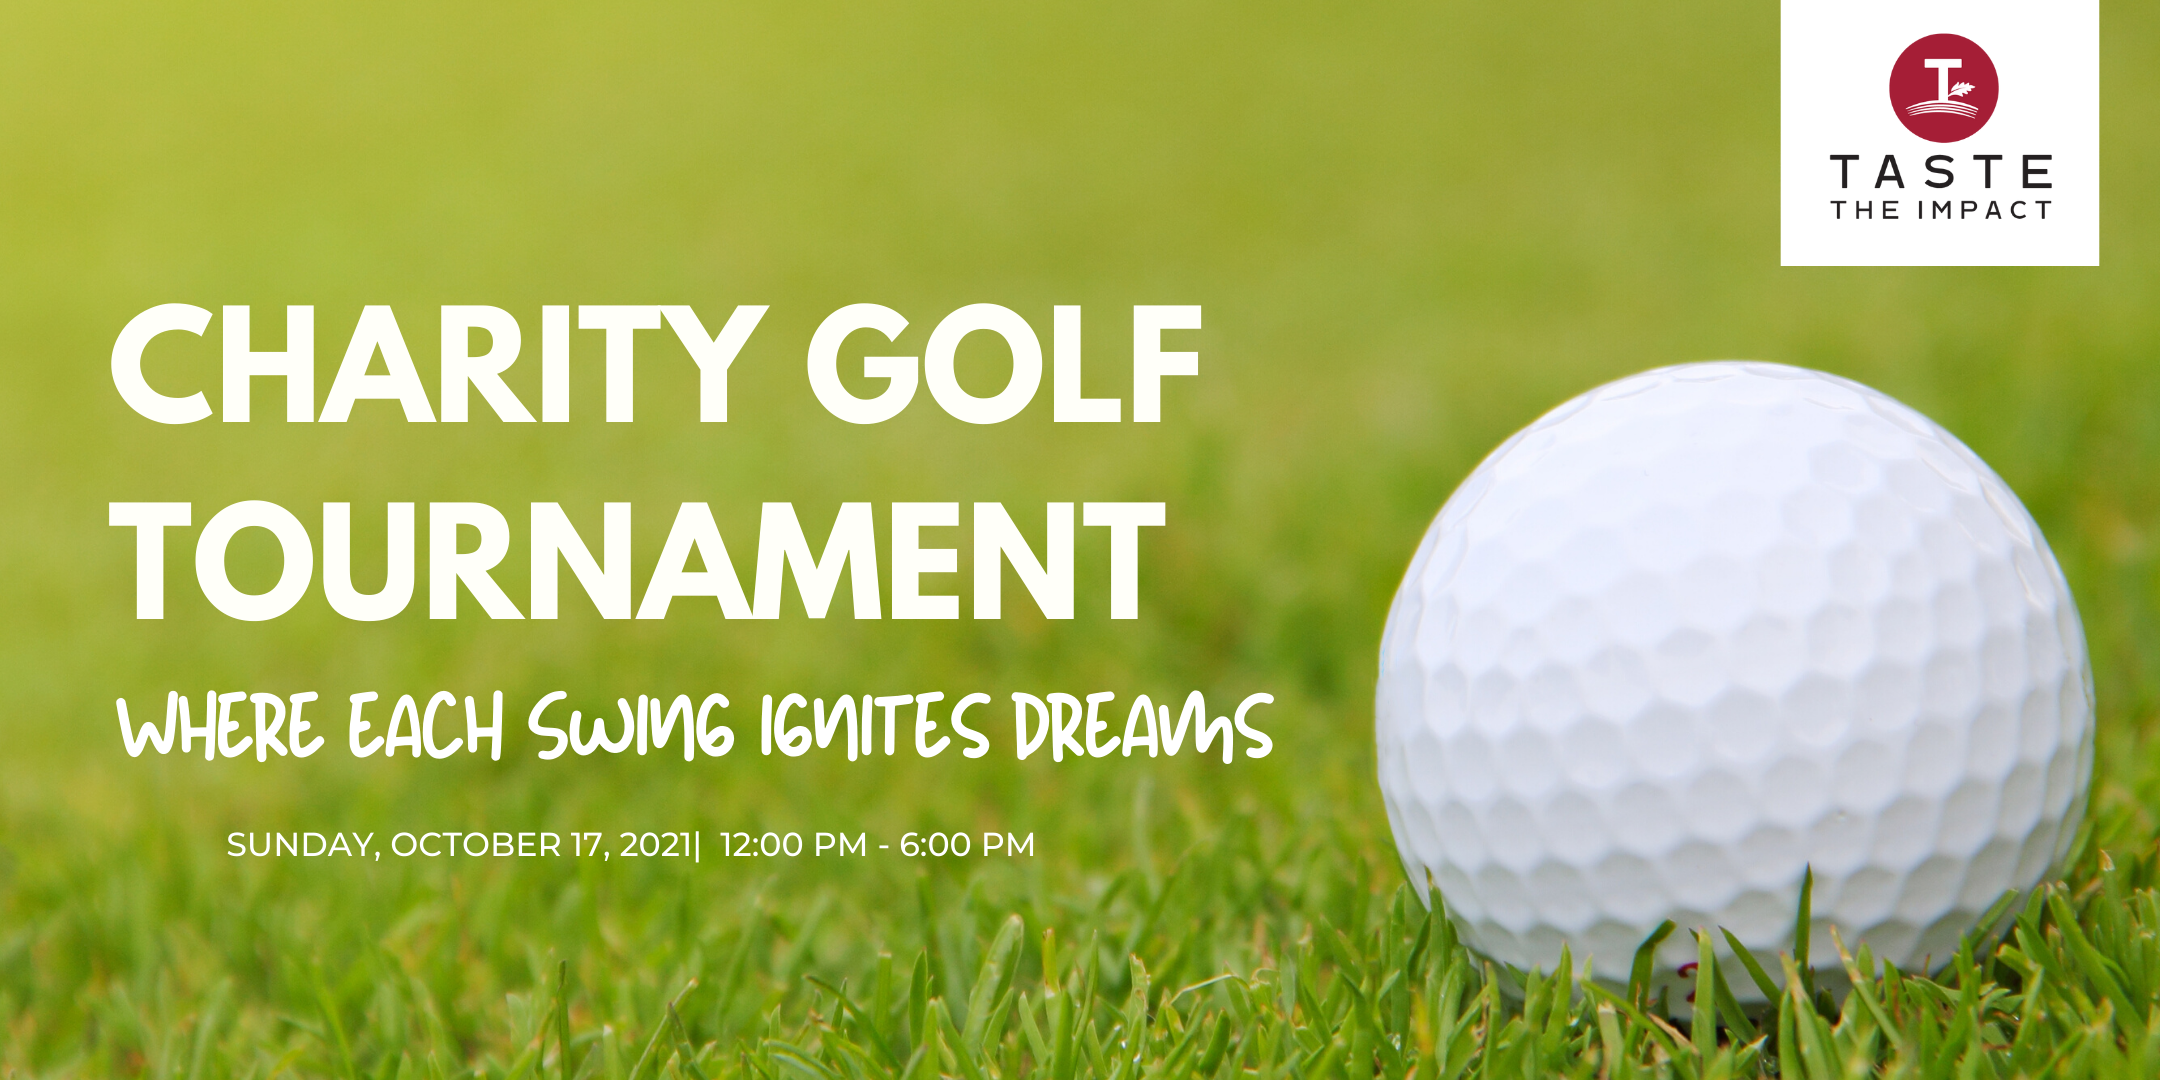 2021 Taste the Impact Charity Golf Tournament